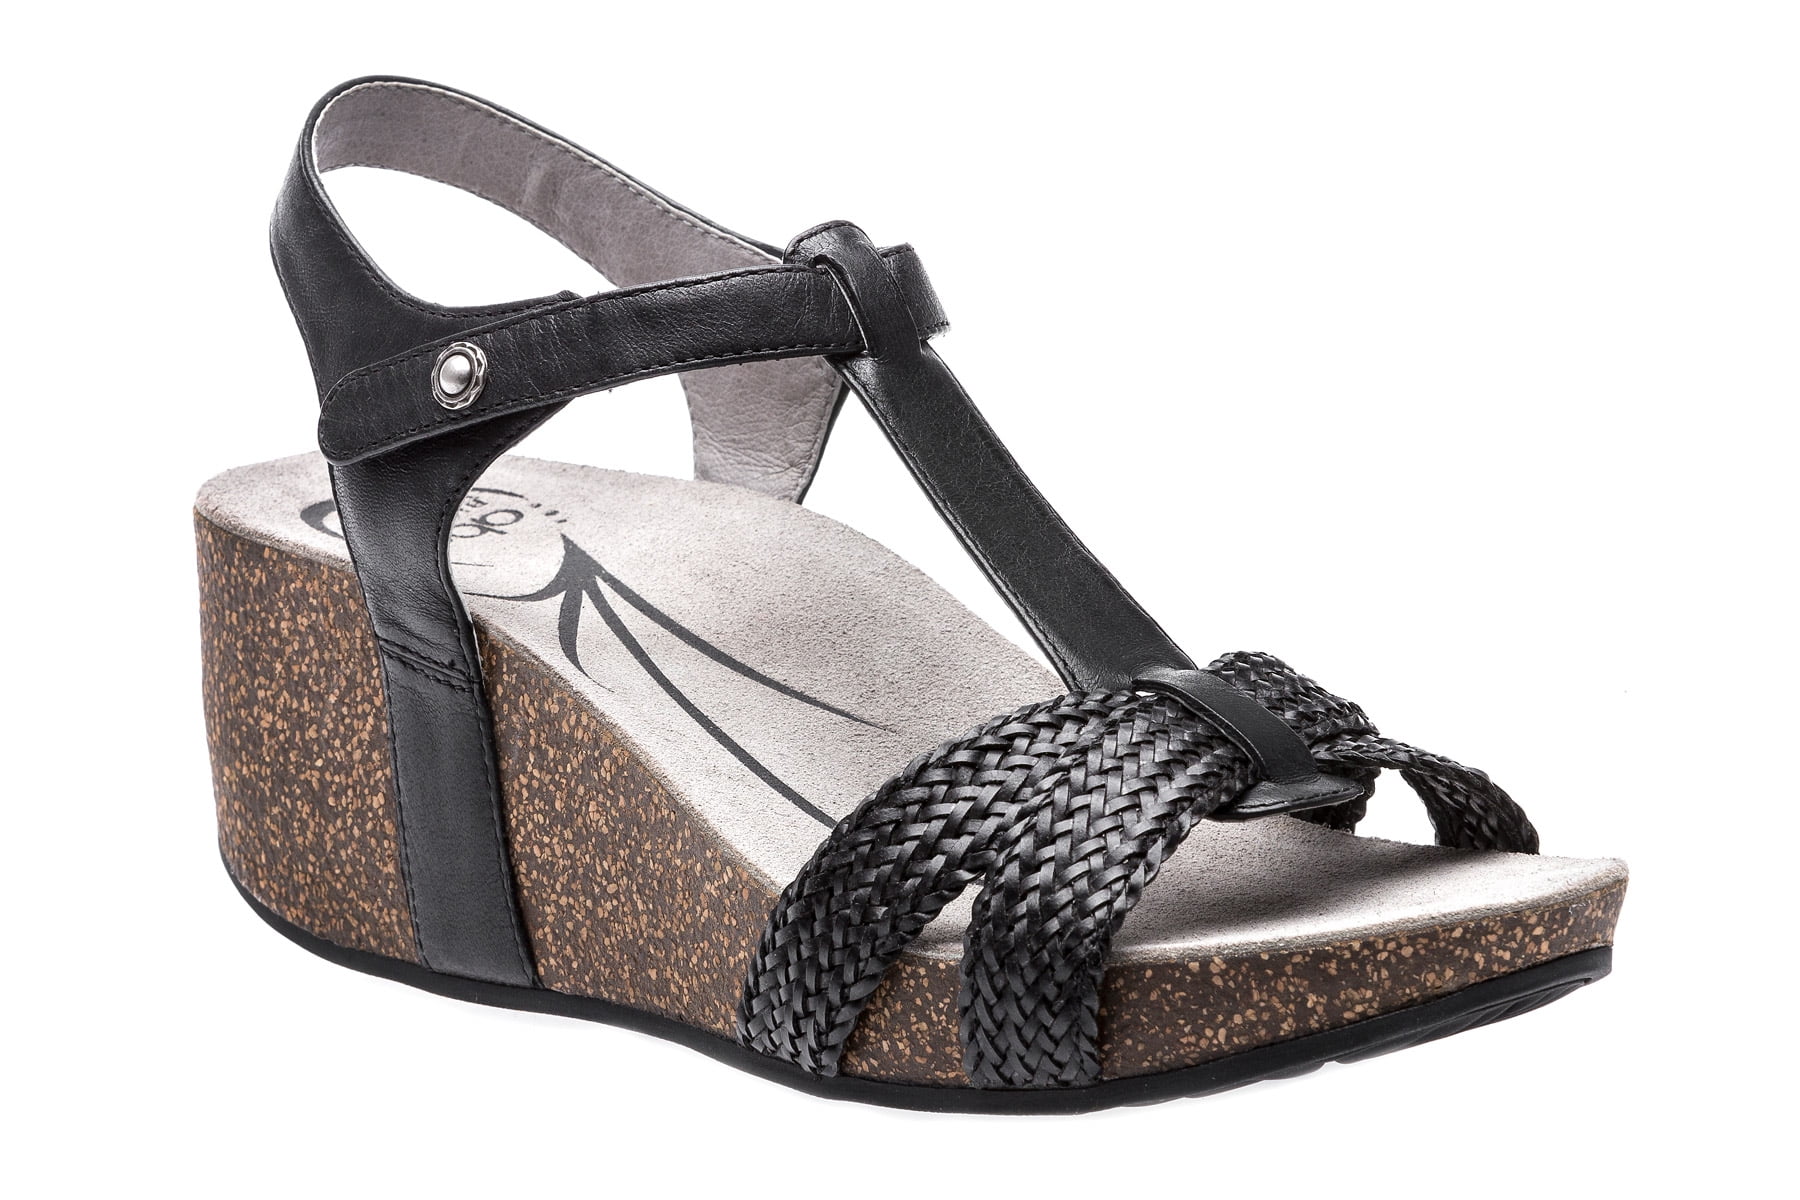 ABEO Footwear - ABEO Urmy Metatarsal - Wedge Sandals - Walmart.com ...